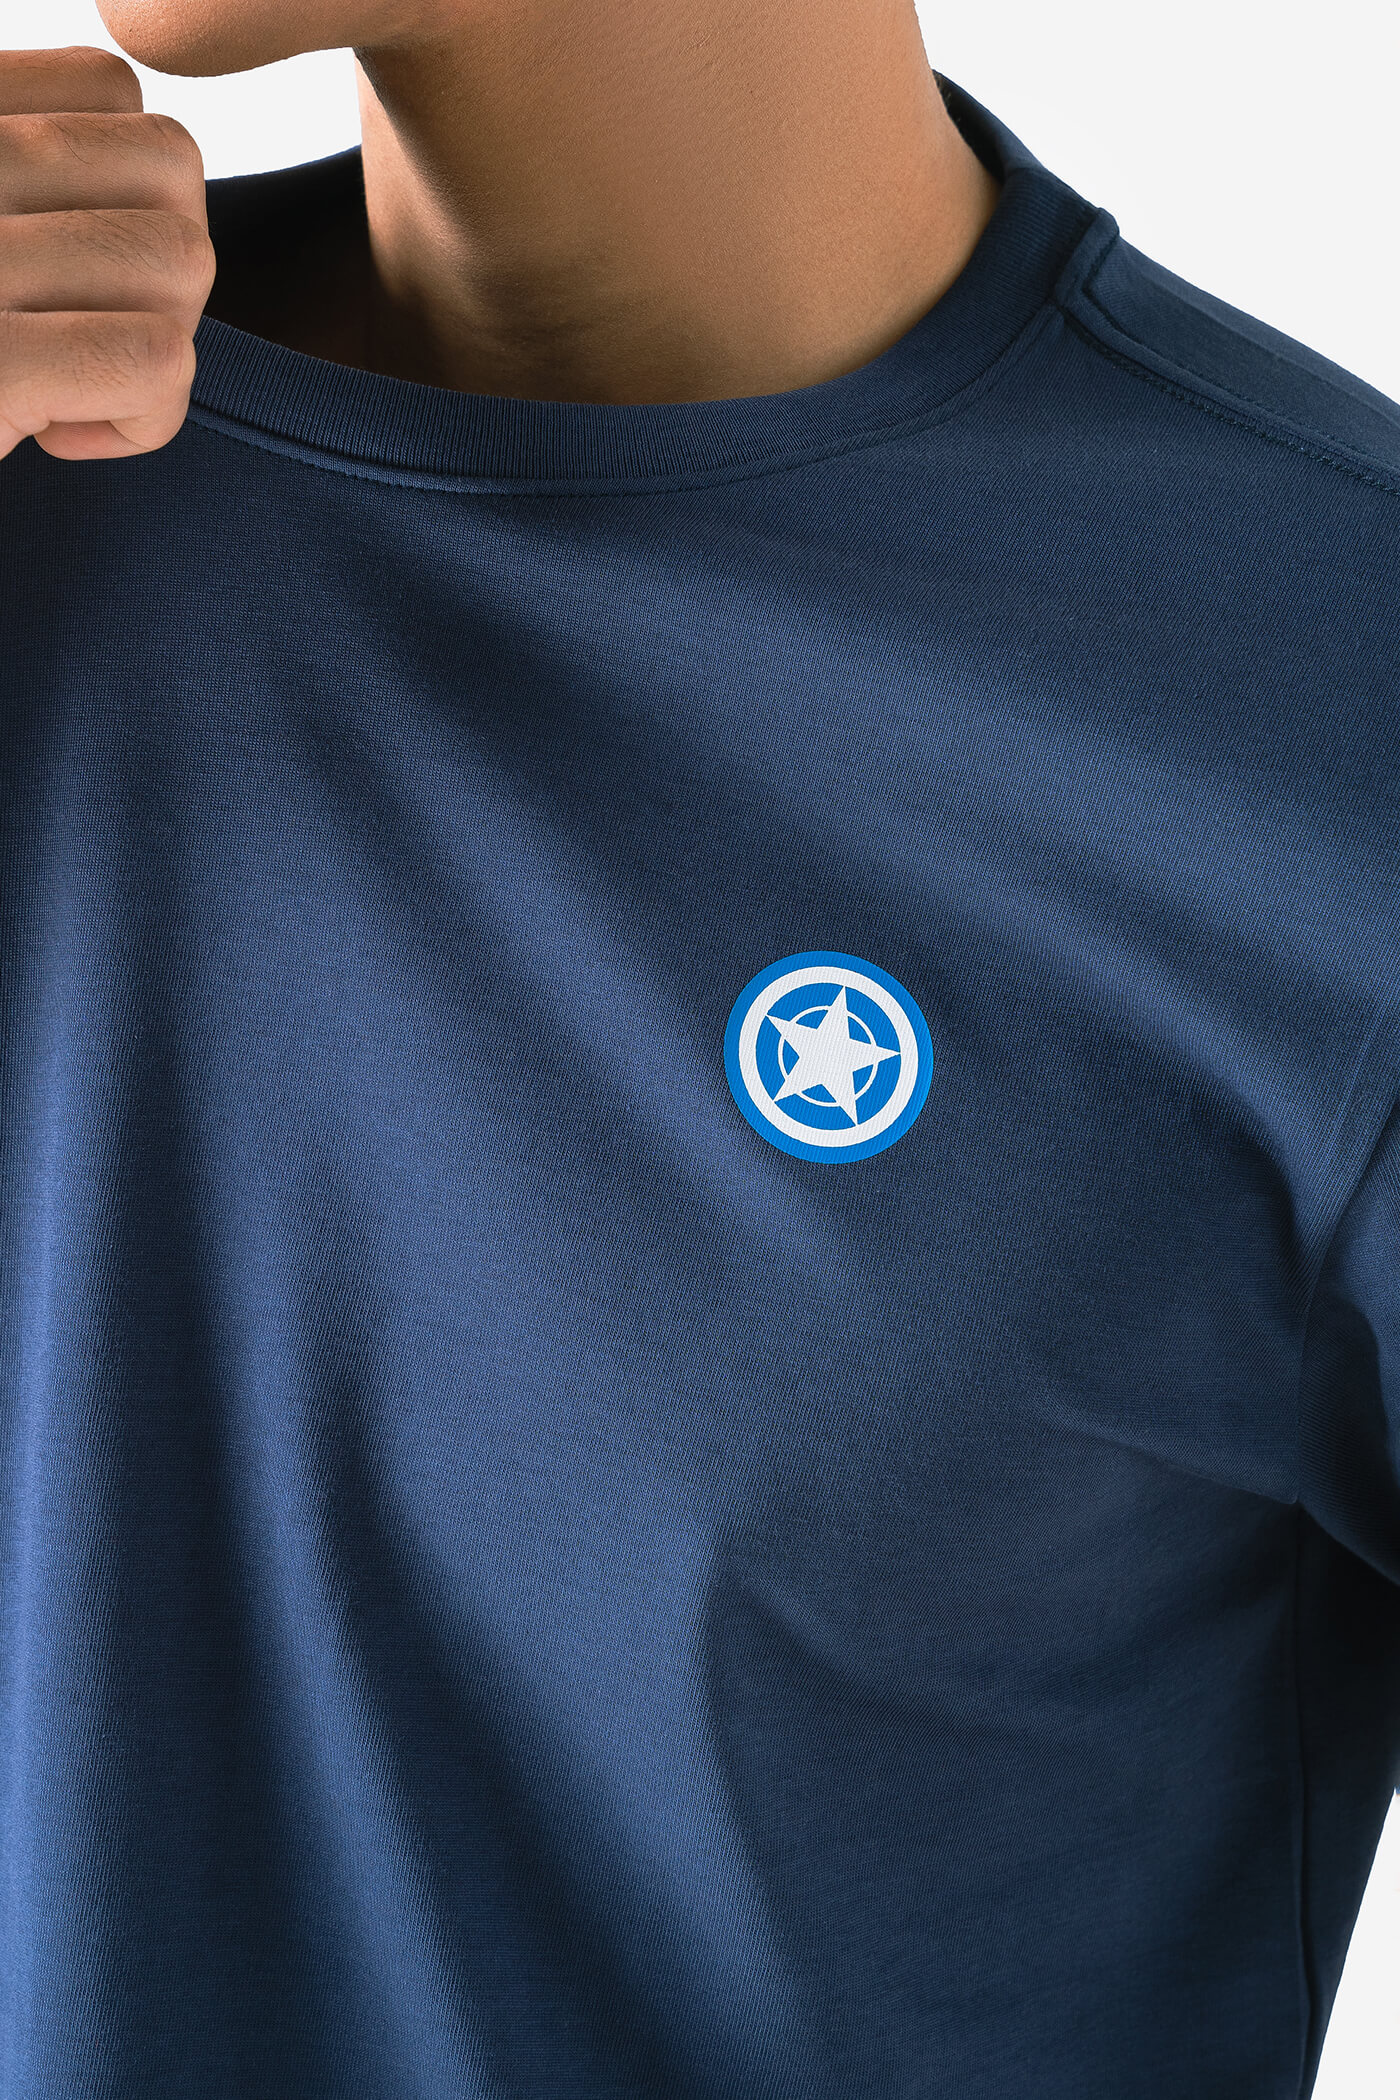 T-Shirt Captain America xanh-navy 4